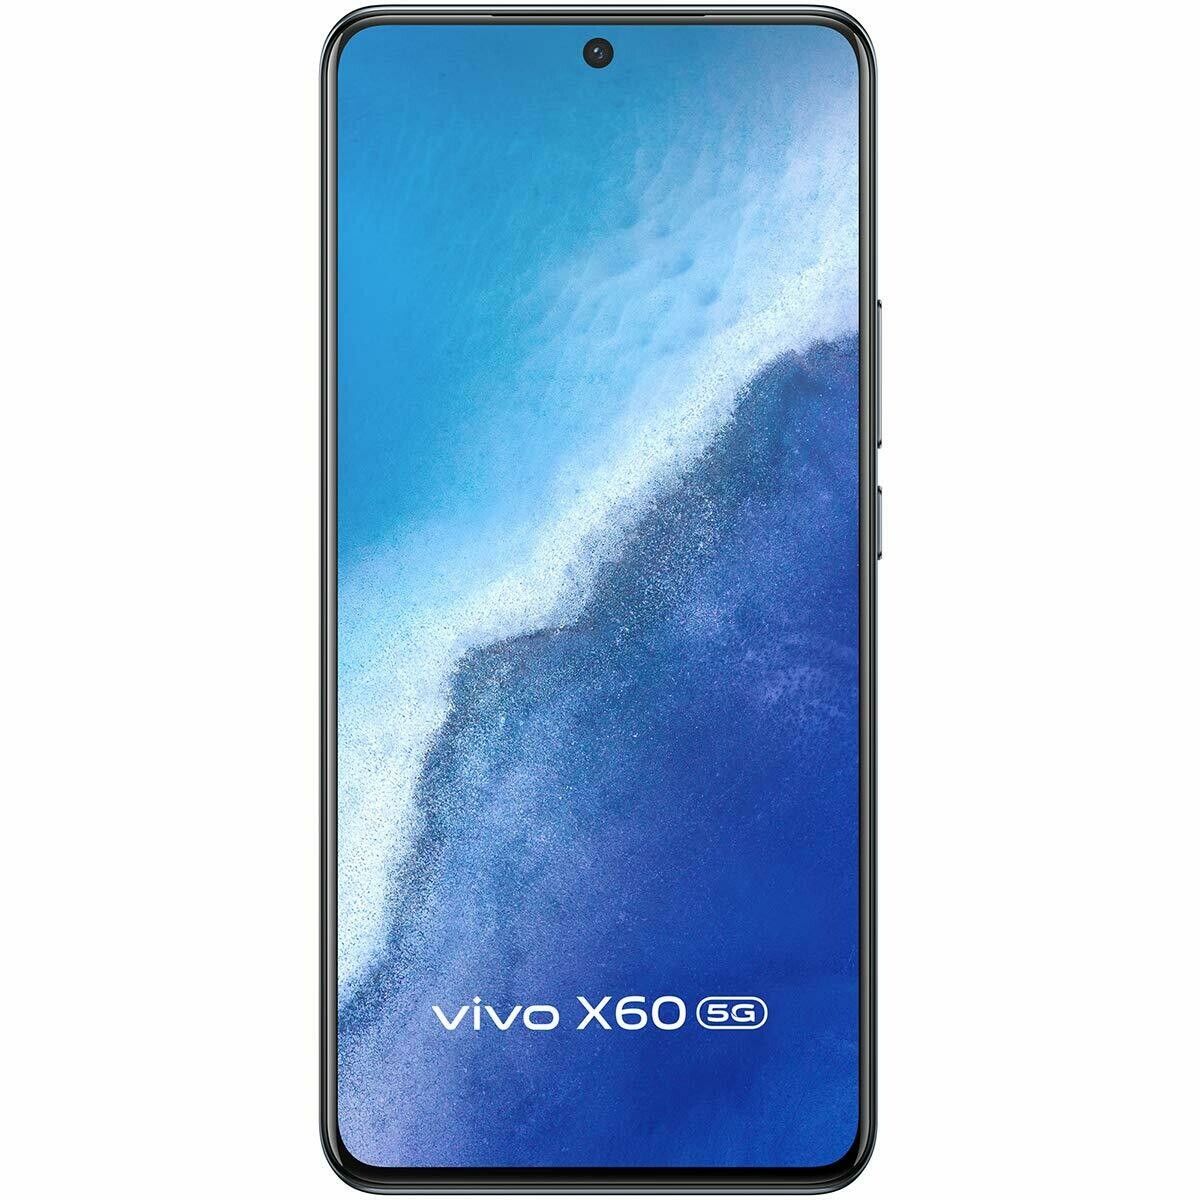 Vivo X60 (Midnight Black, 8GB RAM, 128GB Storage)